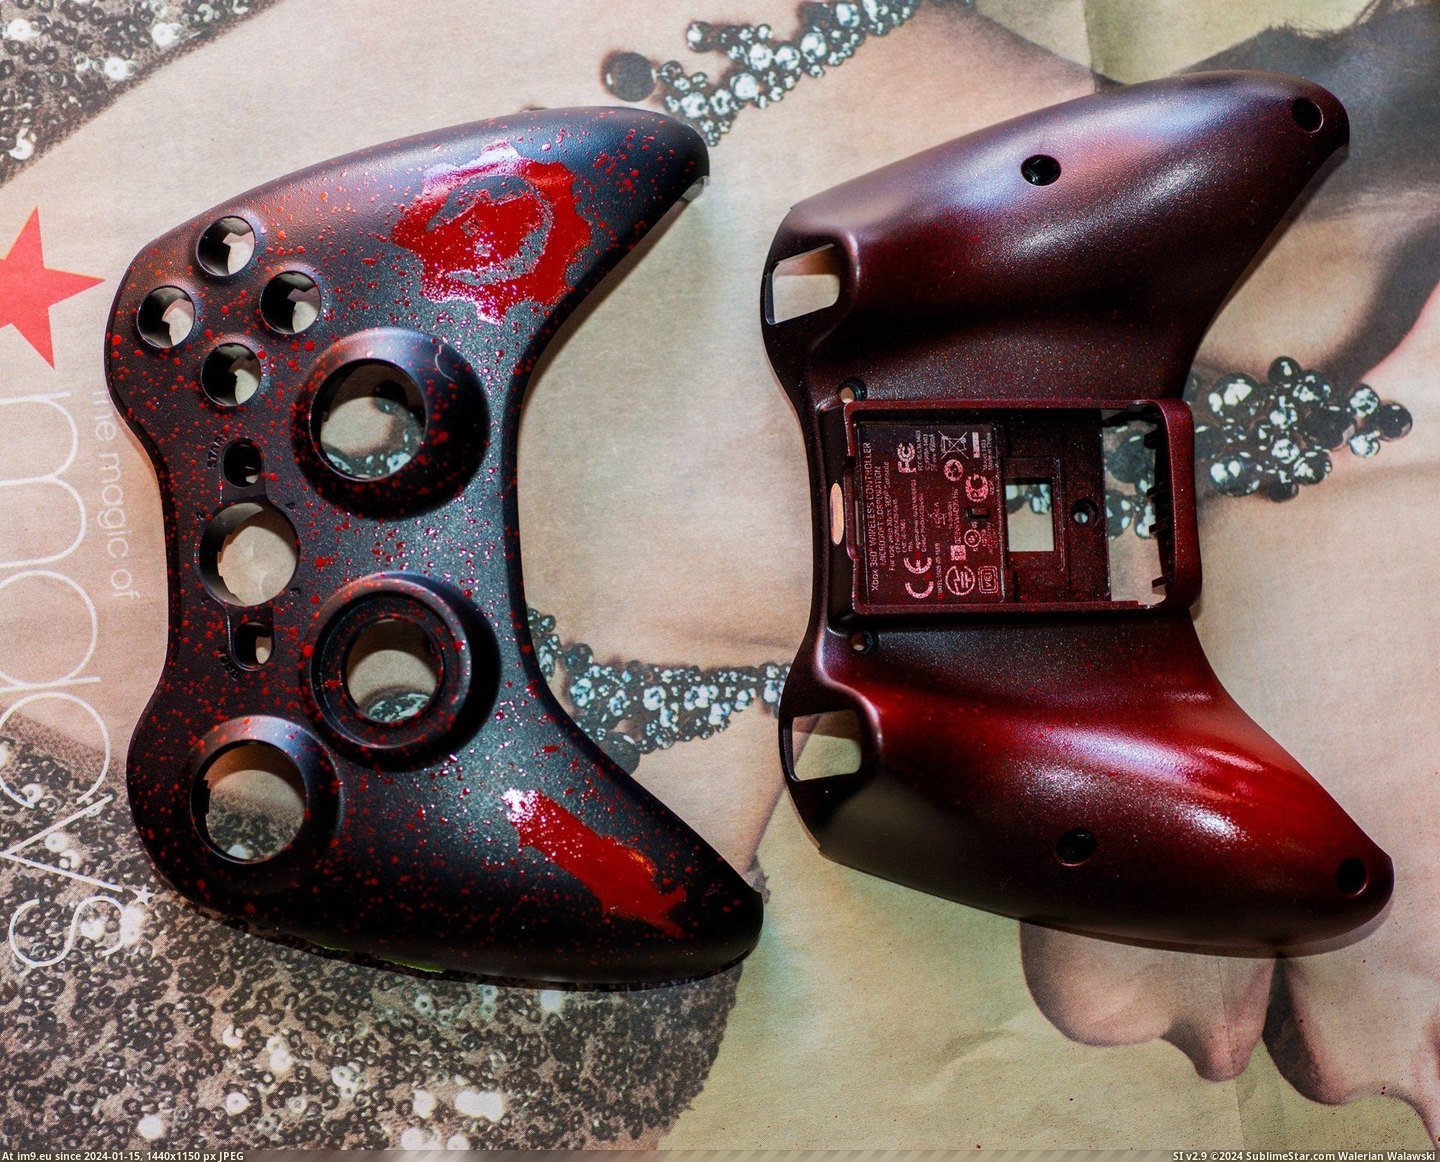 #Gaming #One #War #Controller #Redditor #Gears #Lucky #Painted #Xbox [Gaming] One lucky redditor is getting a custom painted Gears of War Xbox 360 controller! 3 Pic. (Bild von album My r/GAMING favs))